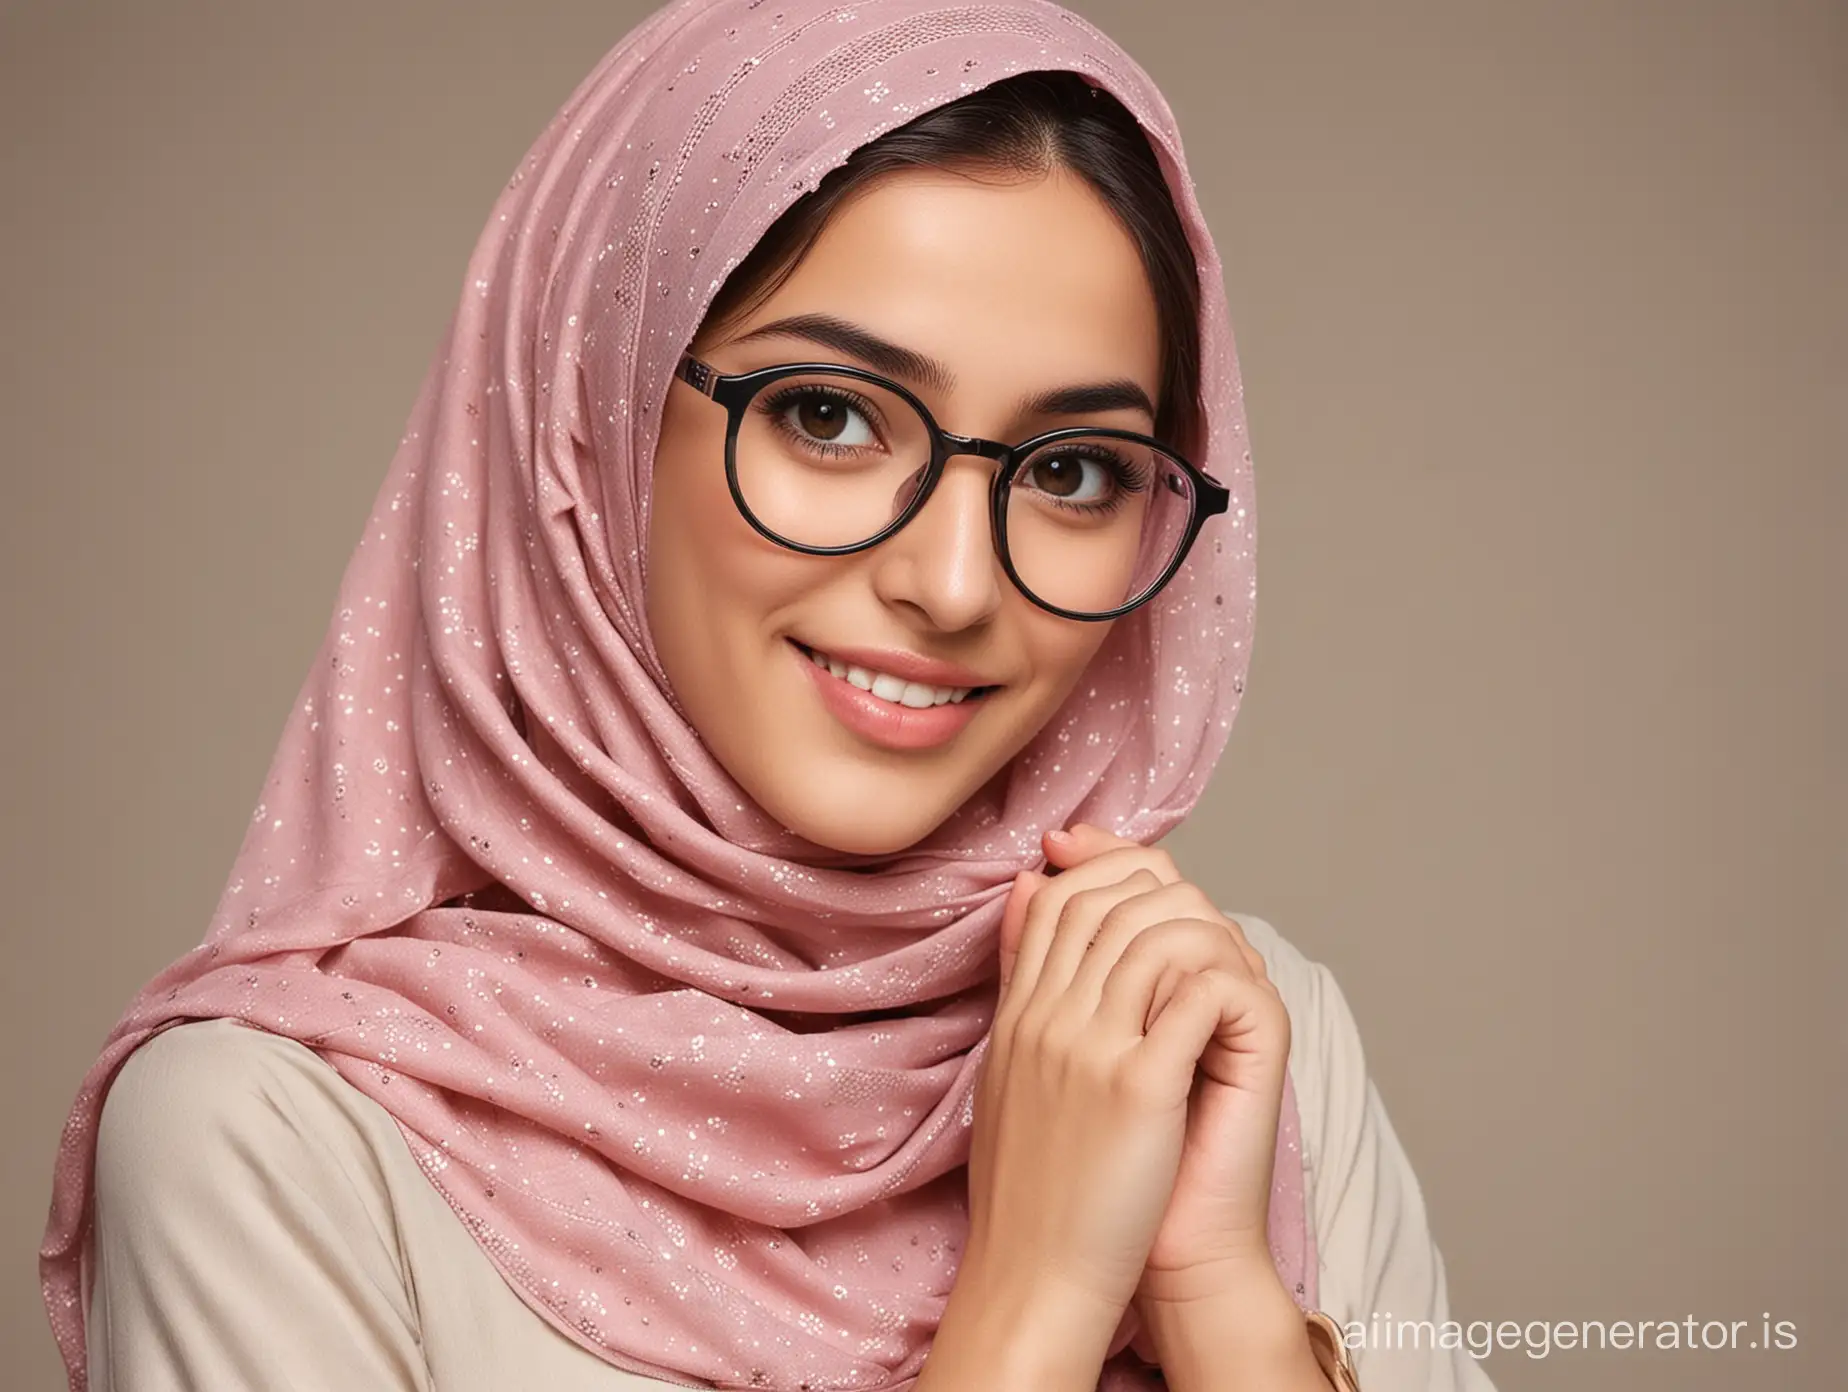 hijab, 18 year old, happy, 8k, hd, hi-resolution, cute pose, awsome, eye glass, blouse